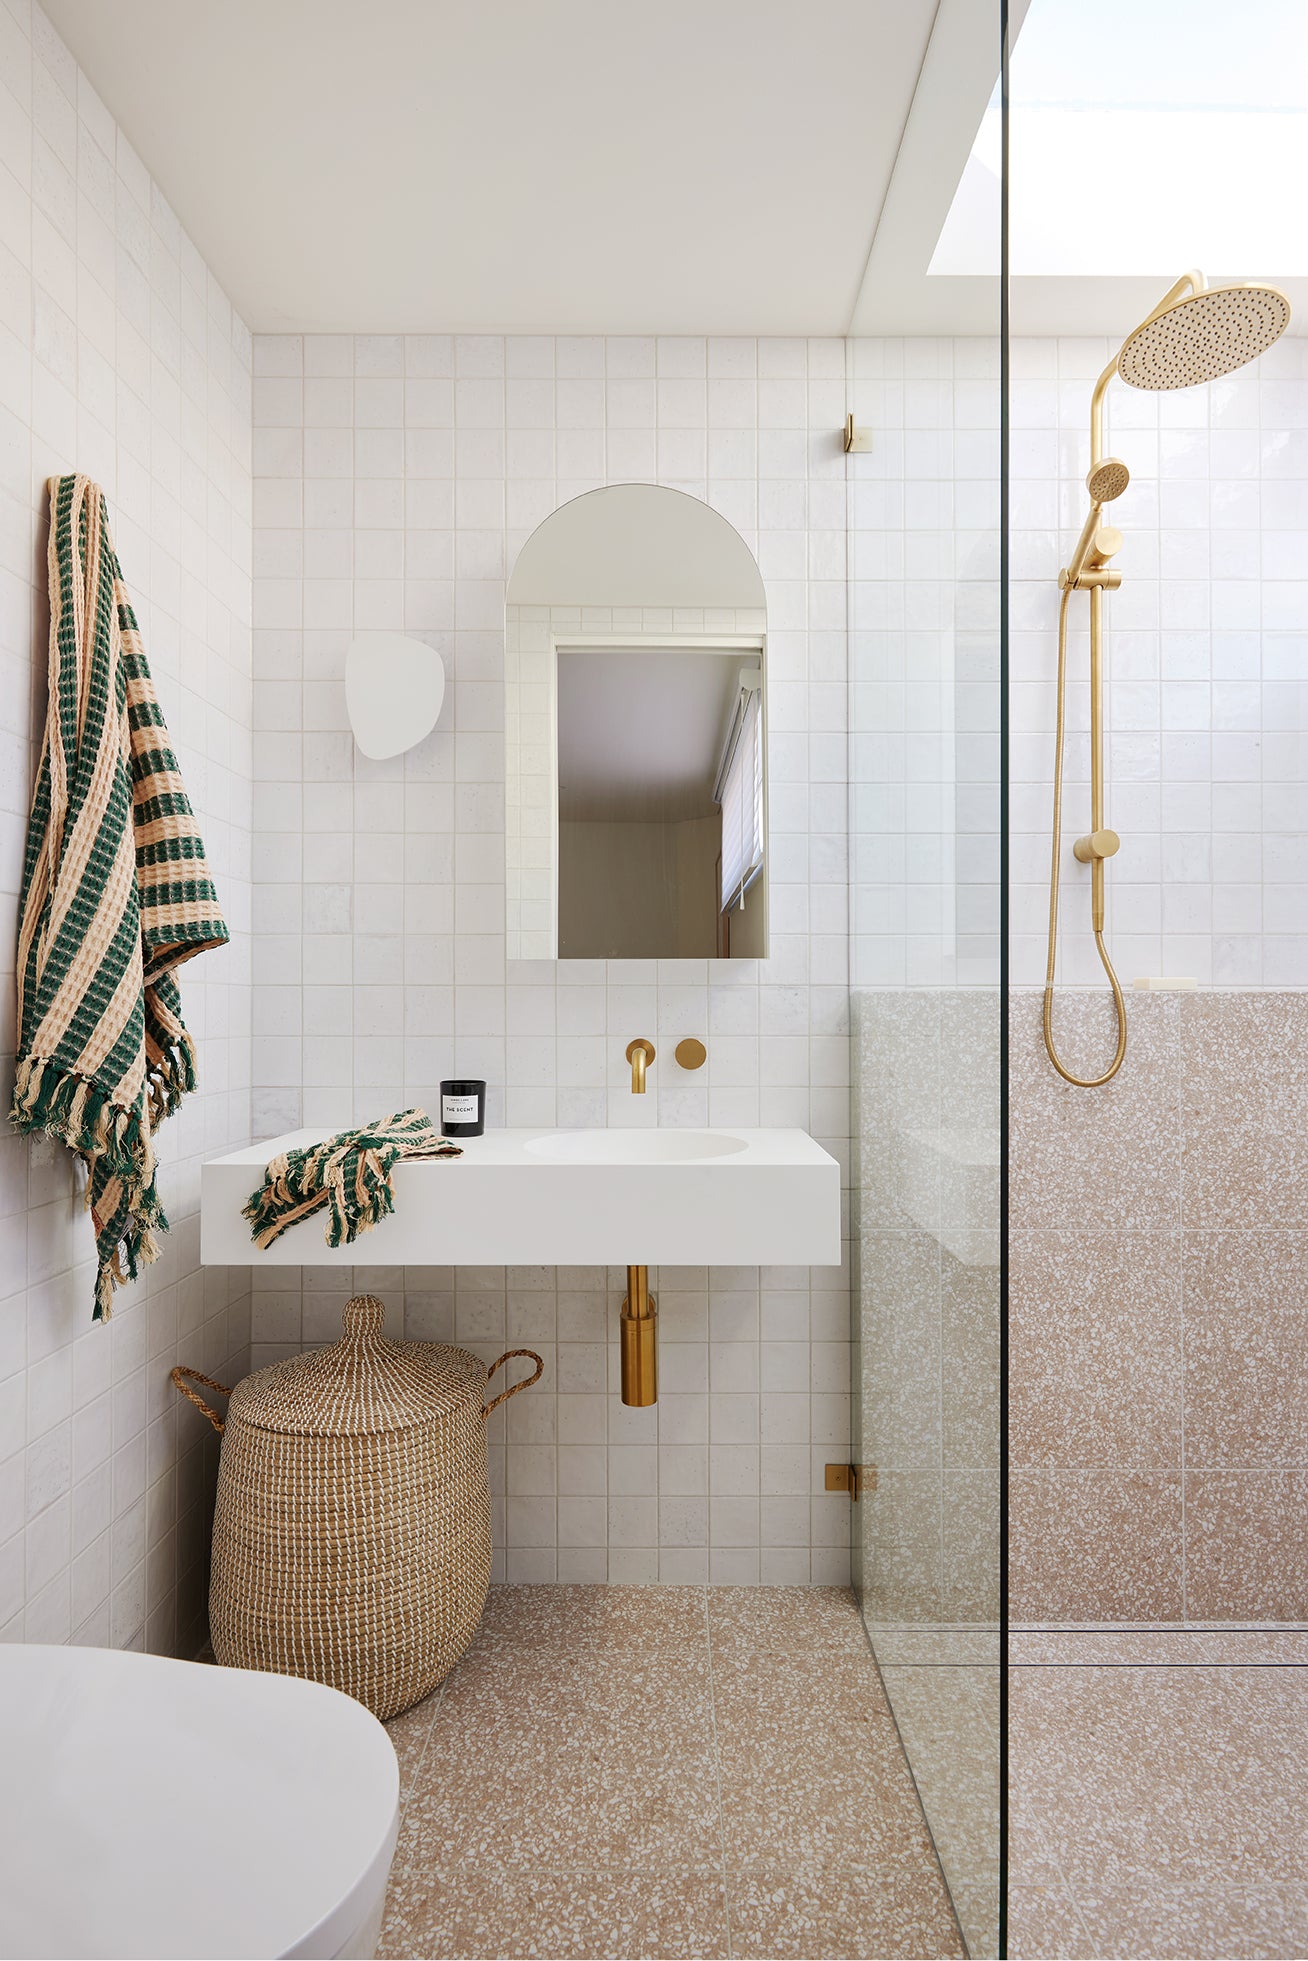 5 Bathroom Storage Ideas to Maximise Space